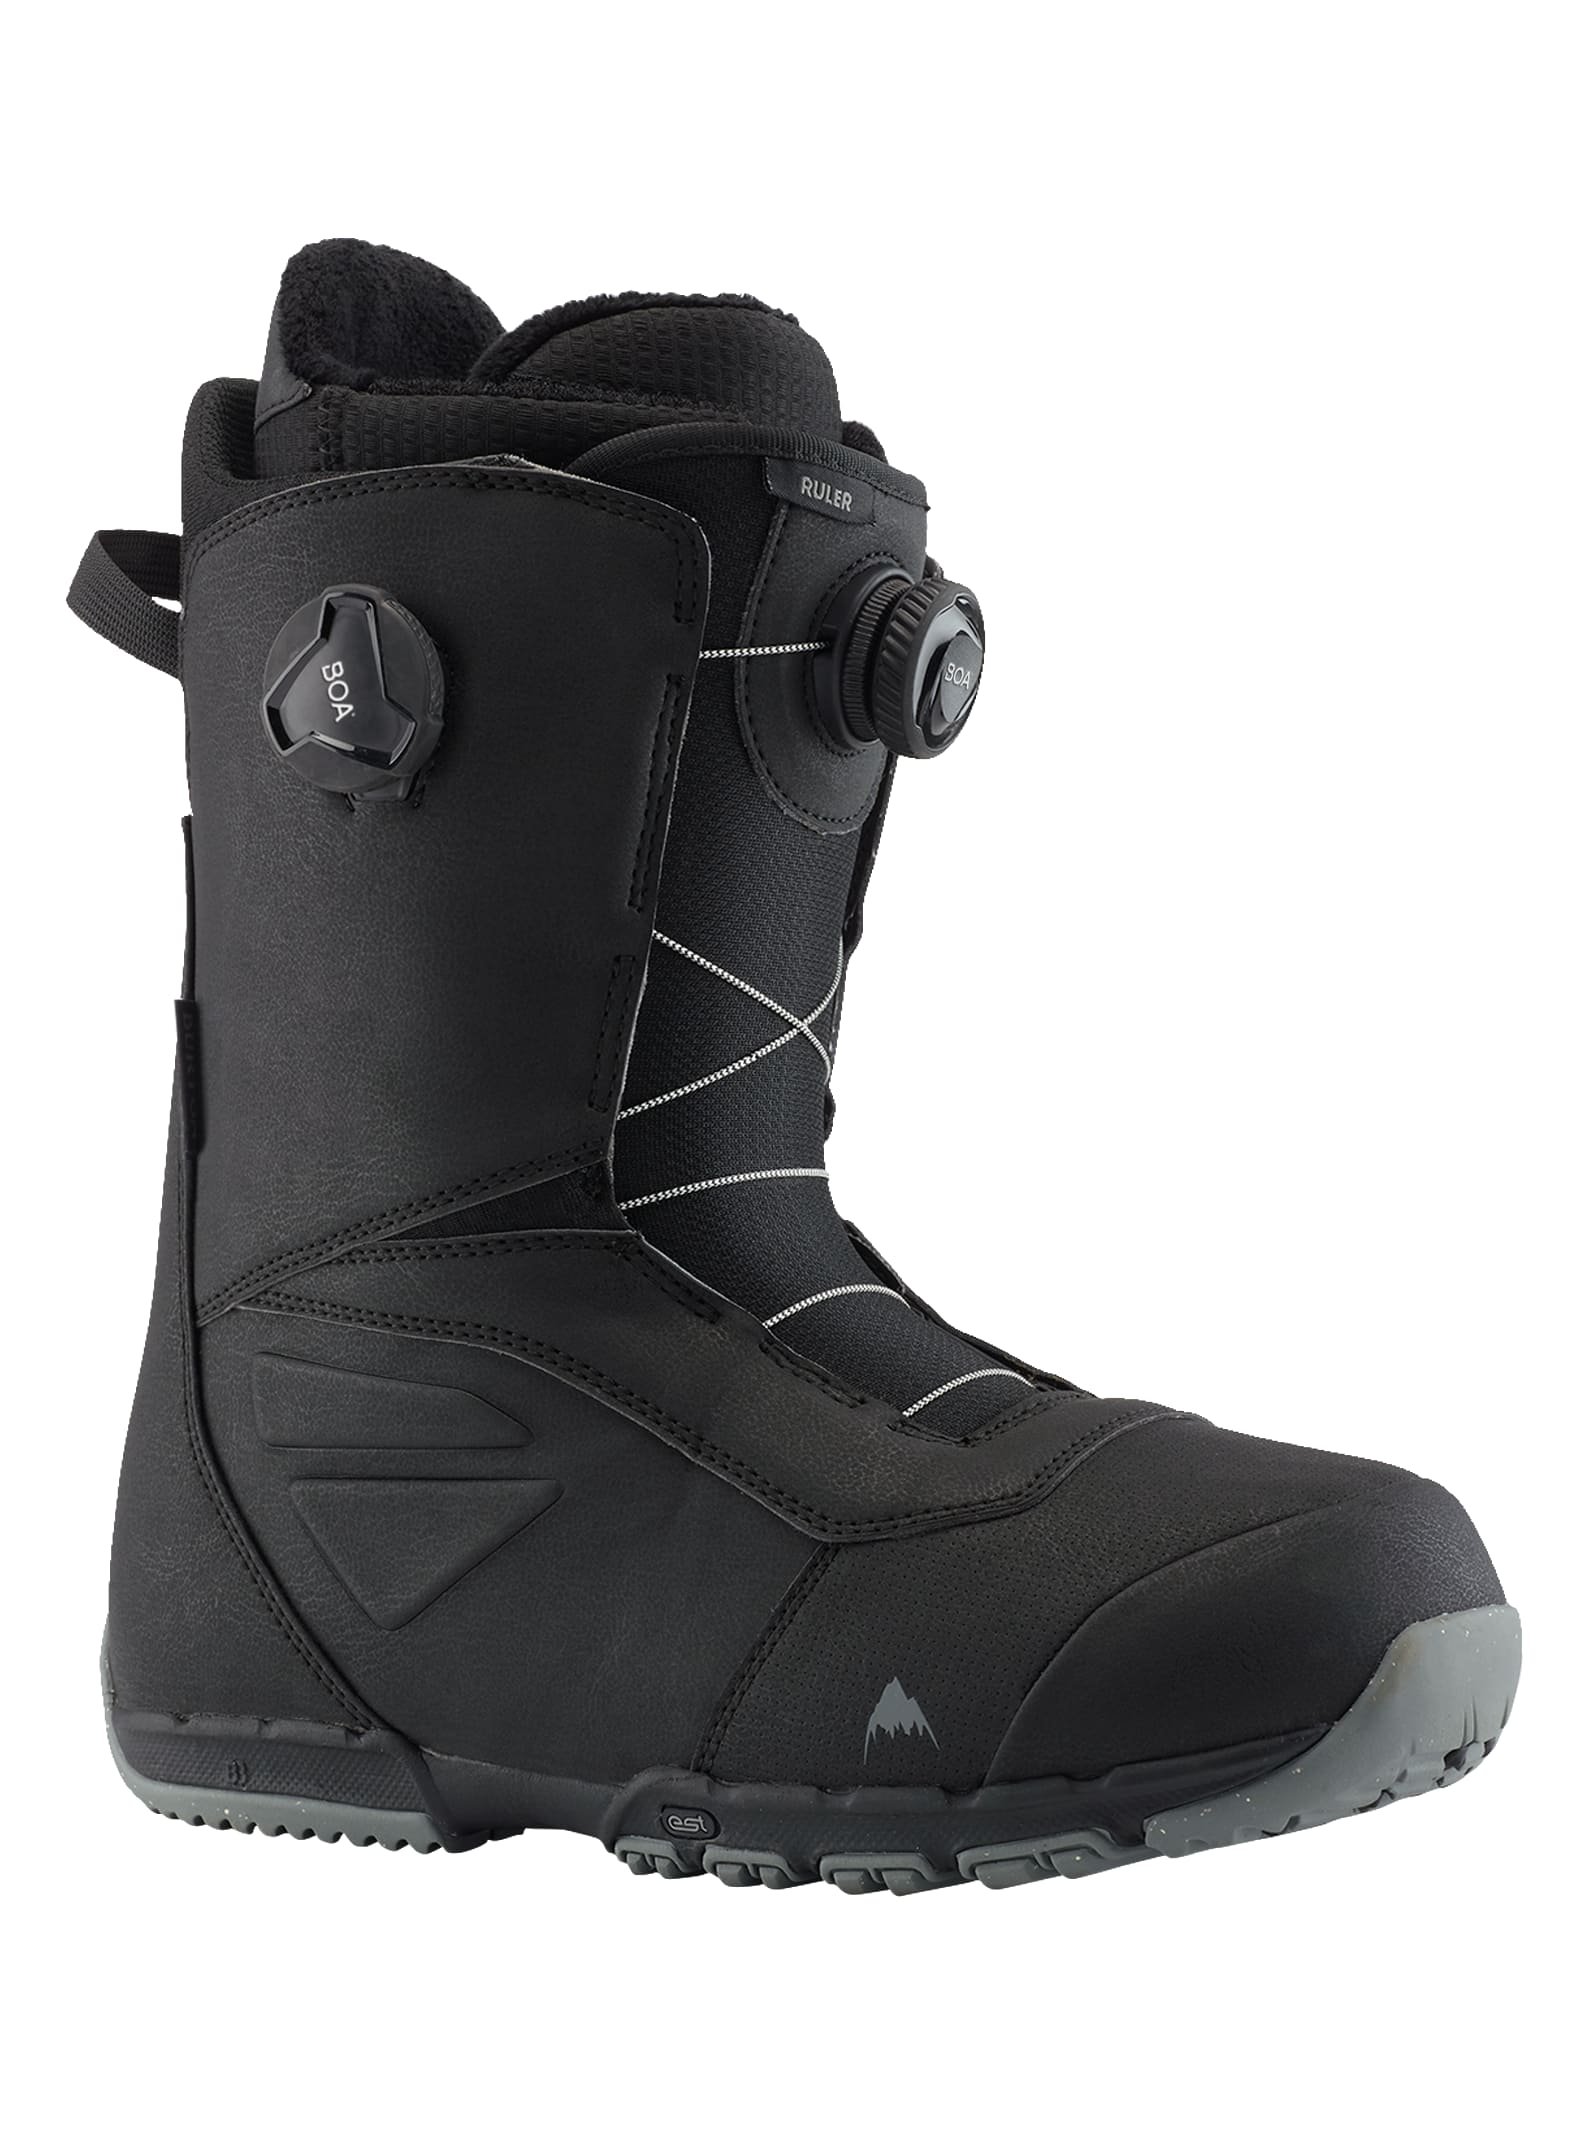 Men's Burton Ruler BOA® Snowboard Boots (Wide)